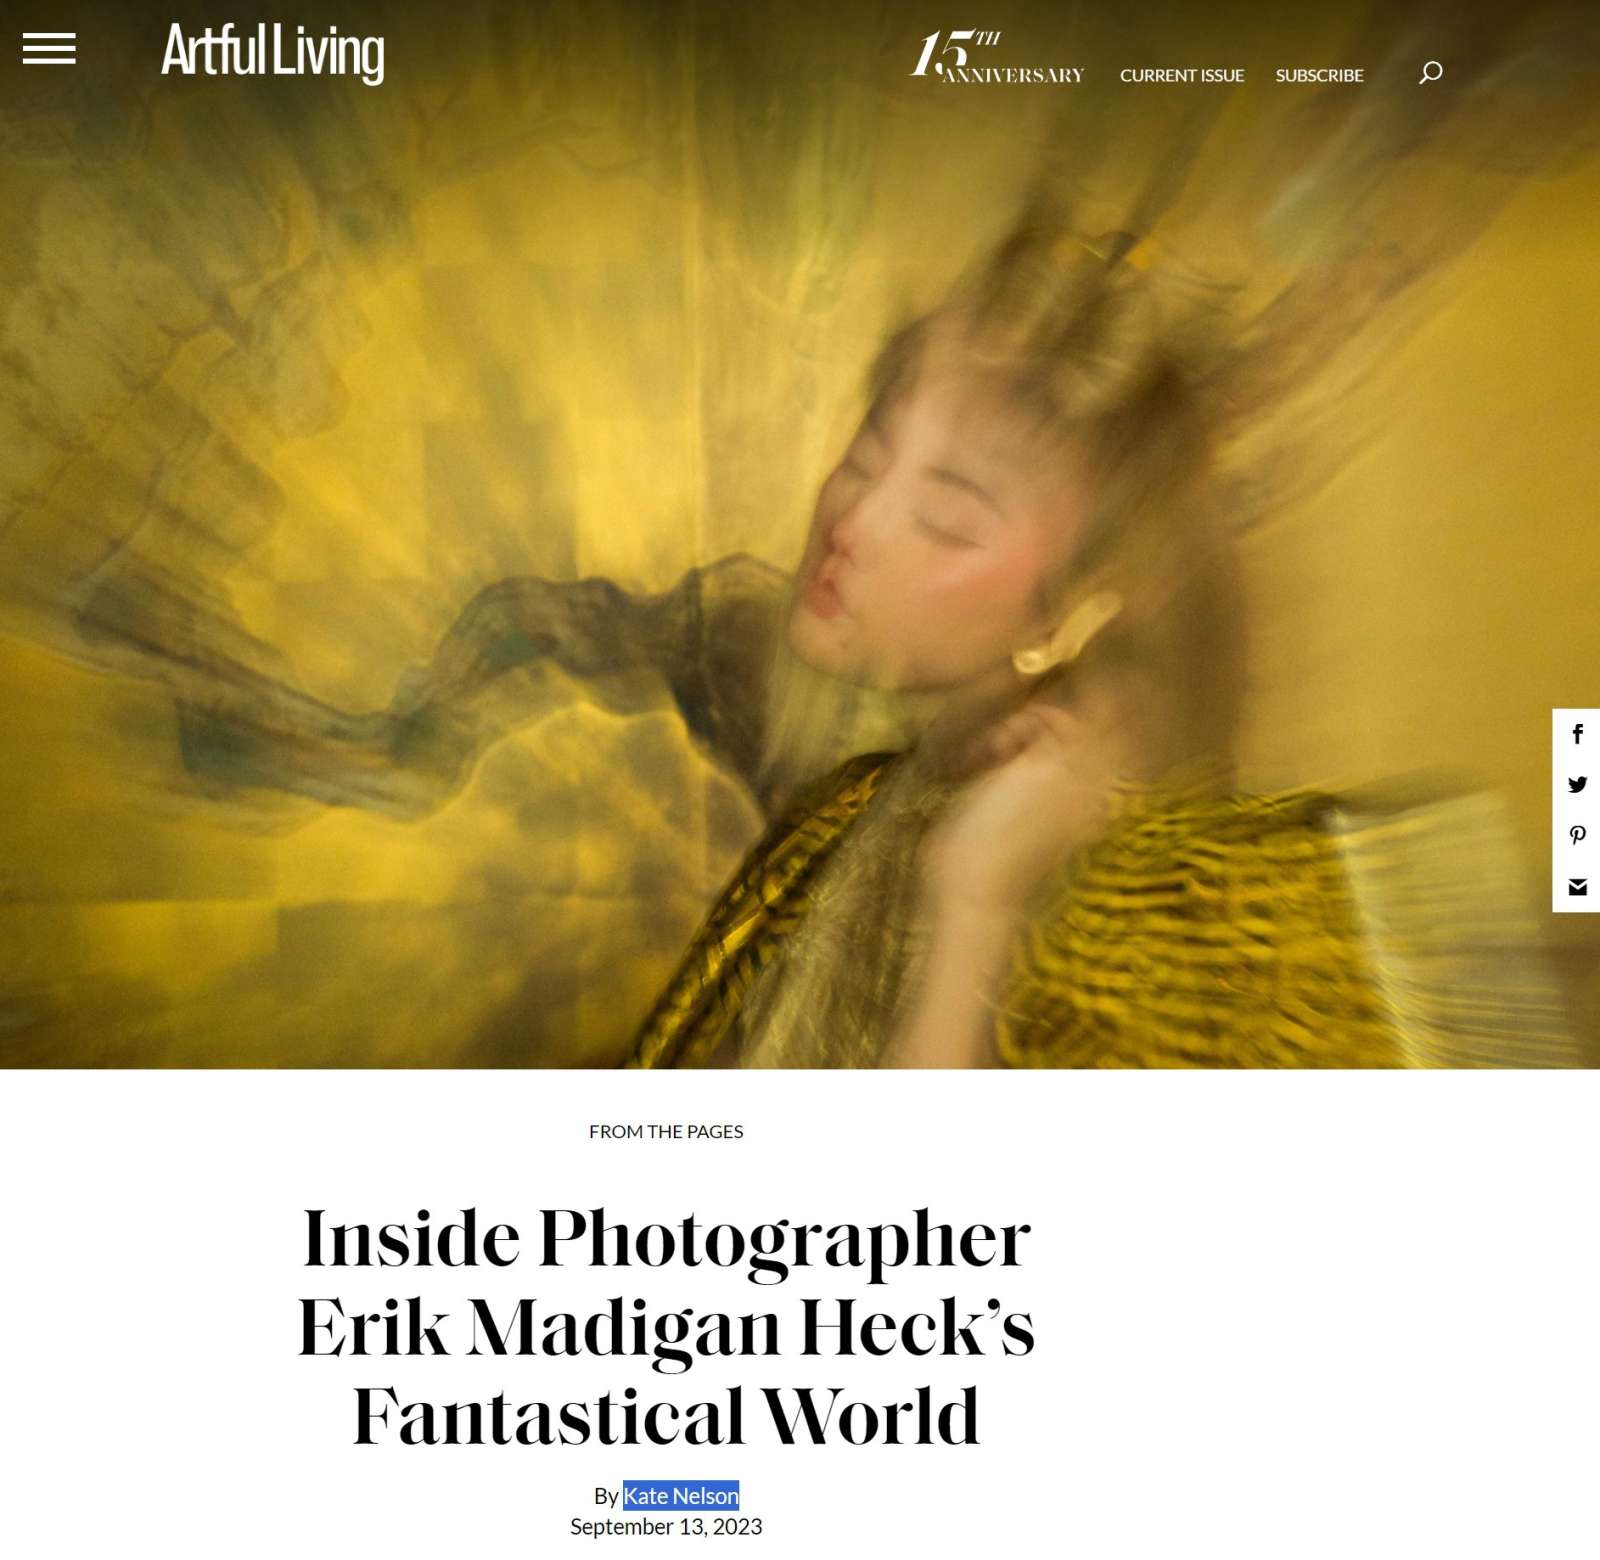 Inside Photographer Erik Madigan Heck’s Fantastical World